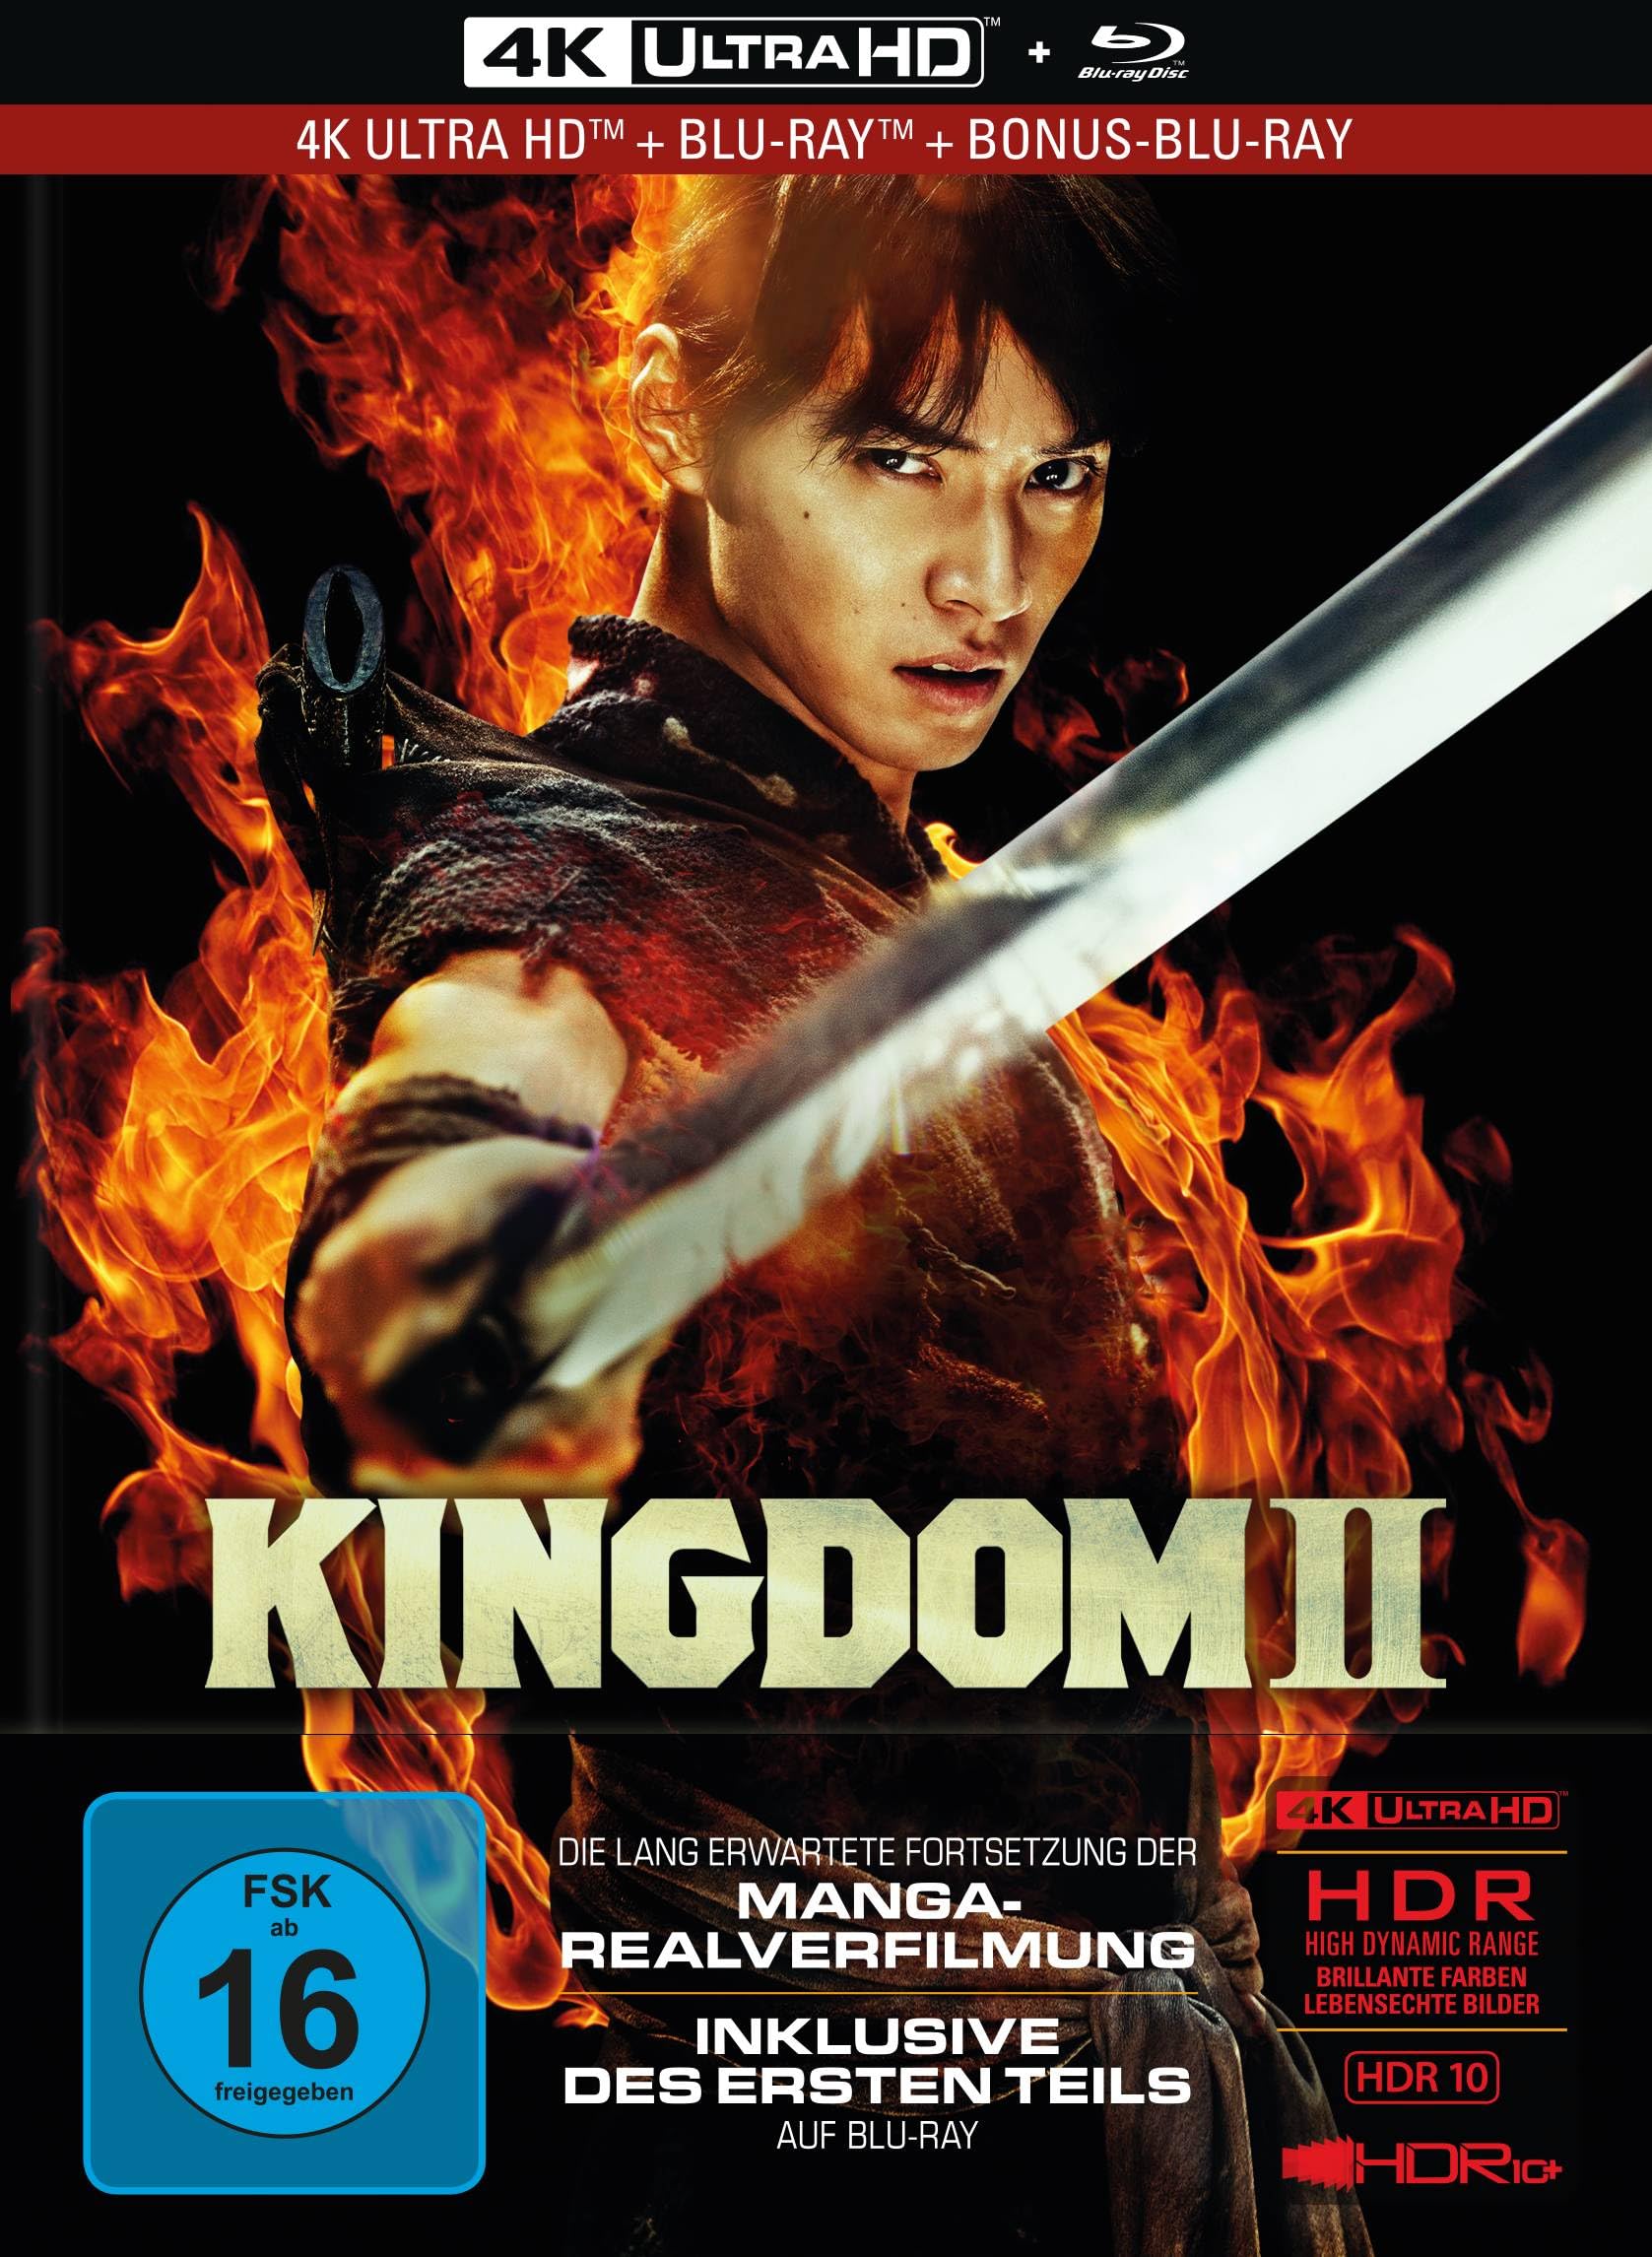 Kingdom 2 - Far and away - 3-Disc Limited Collector's Edition im Mediabook (4K Ultra HD) (+ Blu-ray) (+ Bonus-Blu-ray)